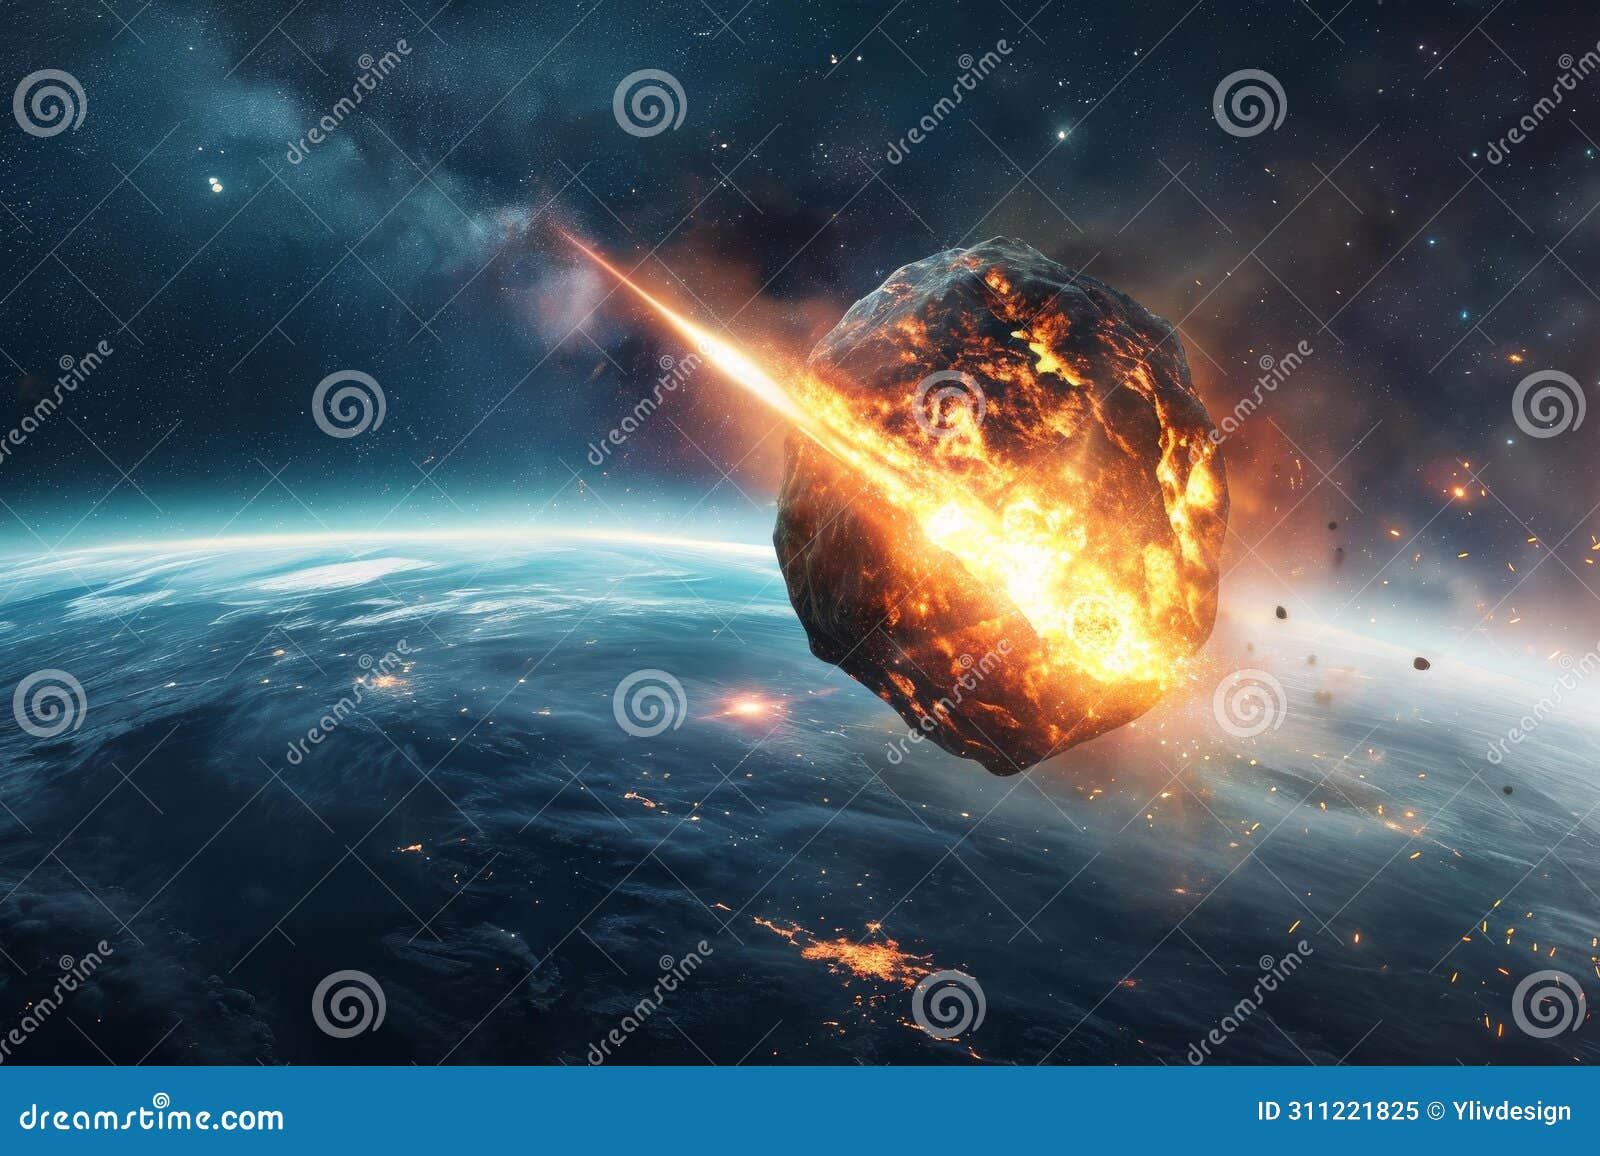 alarming asteroid earth collision. generate ai